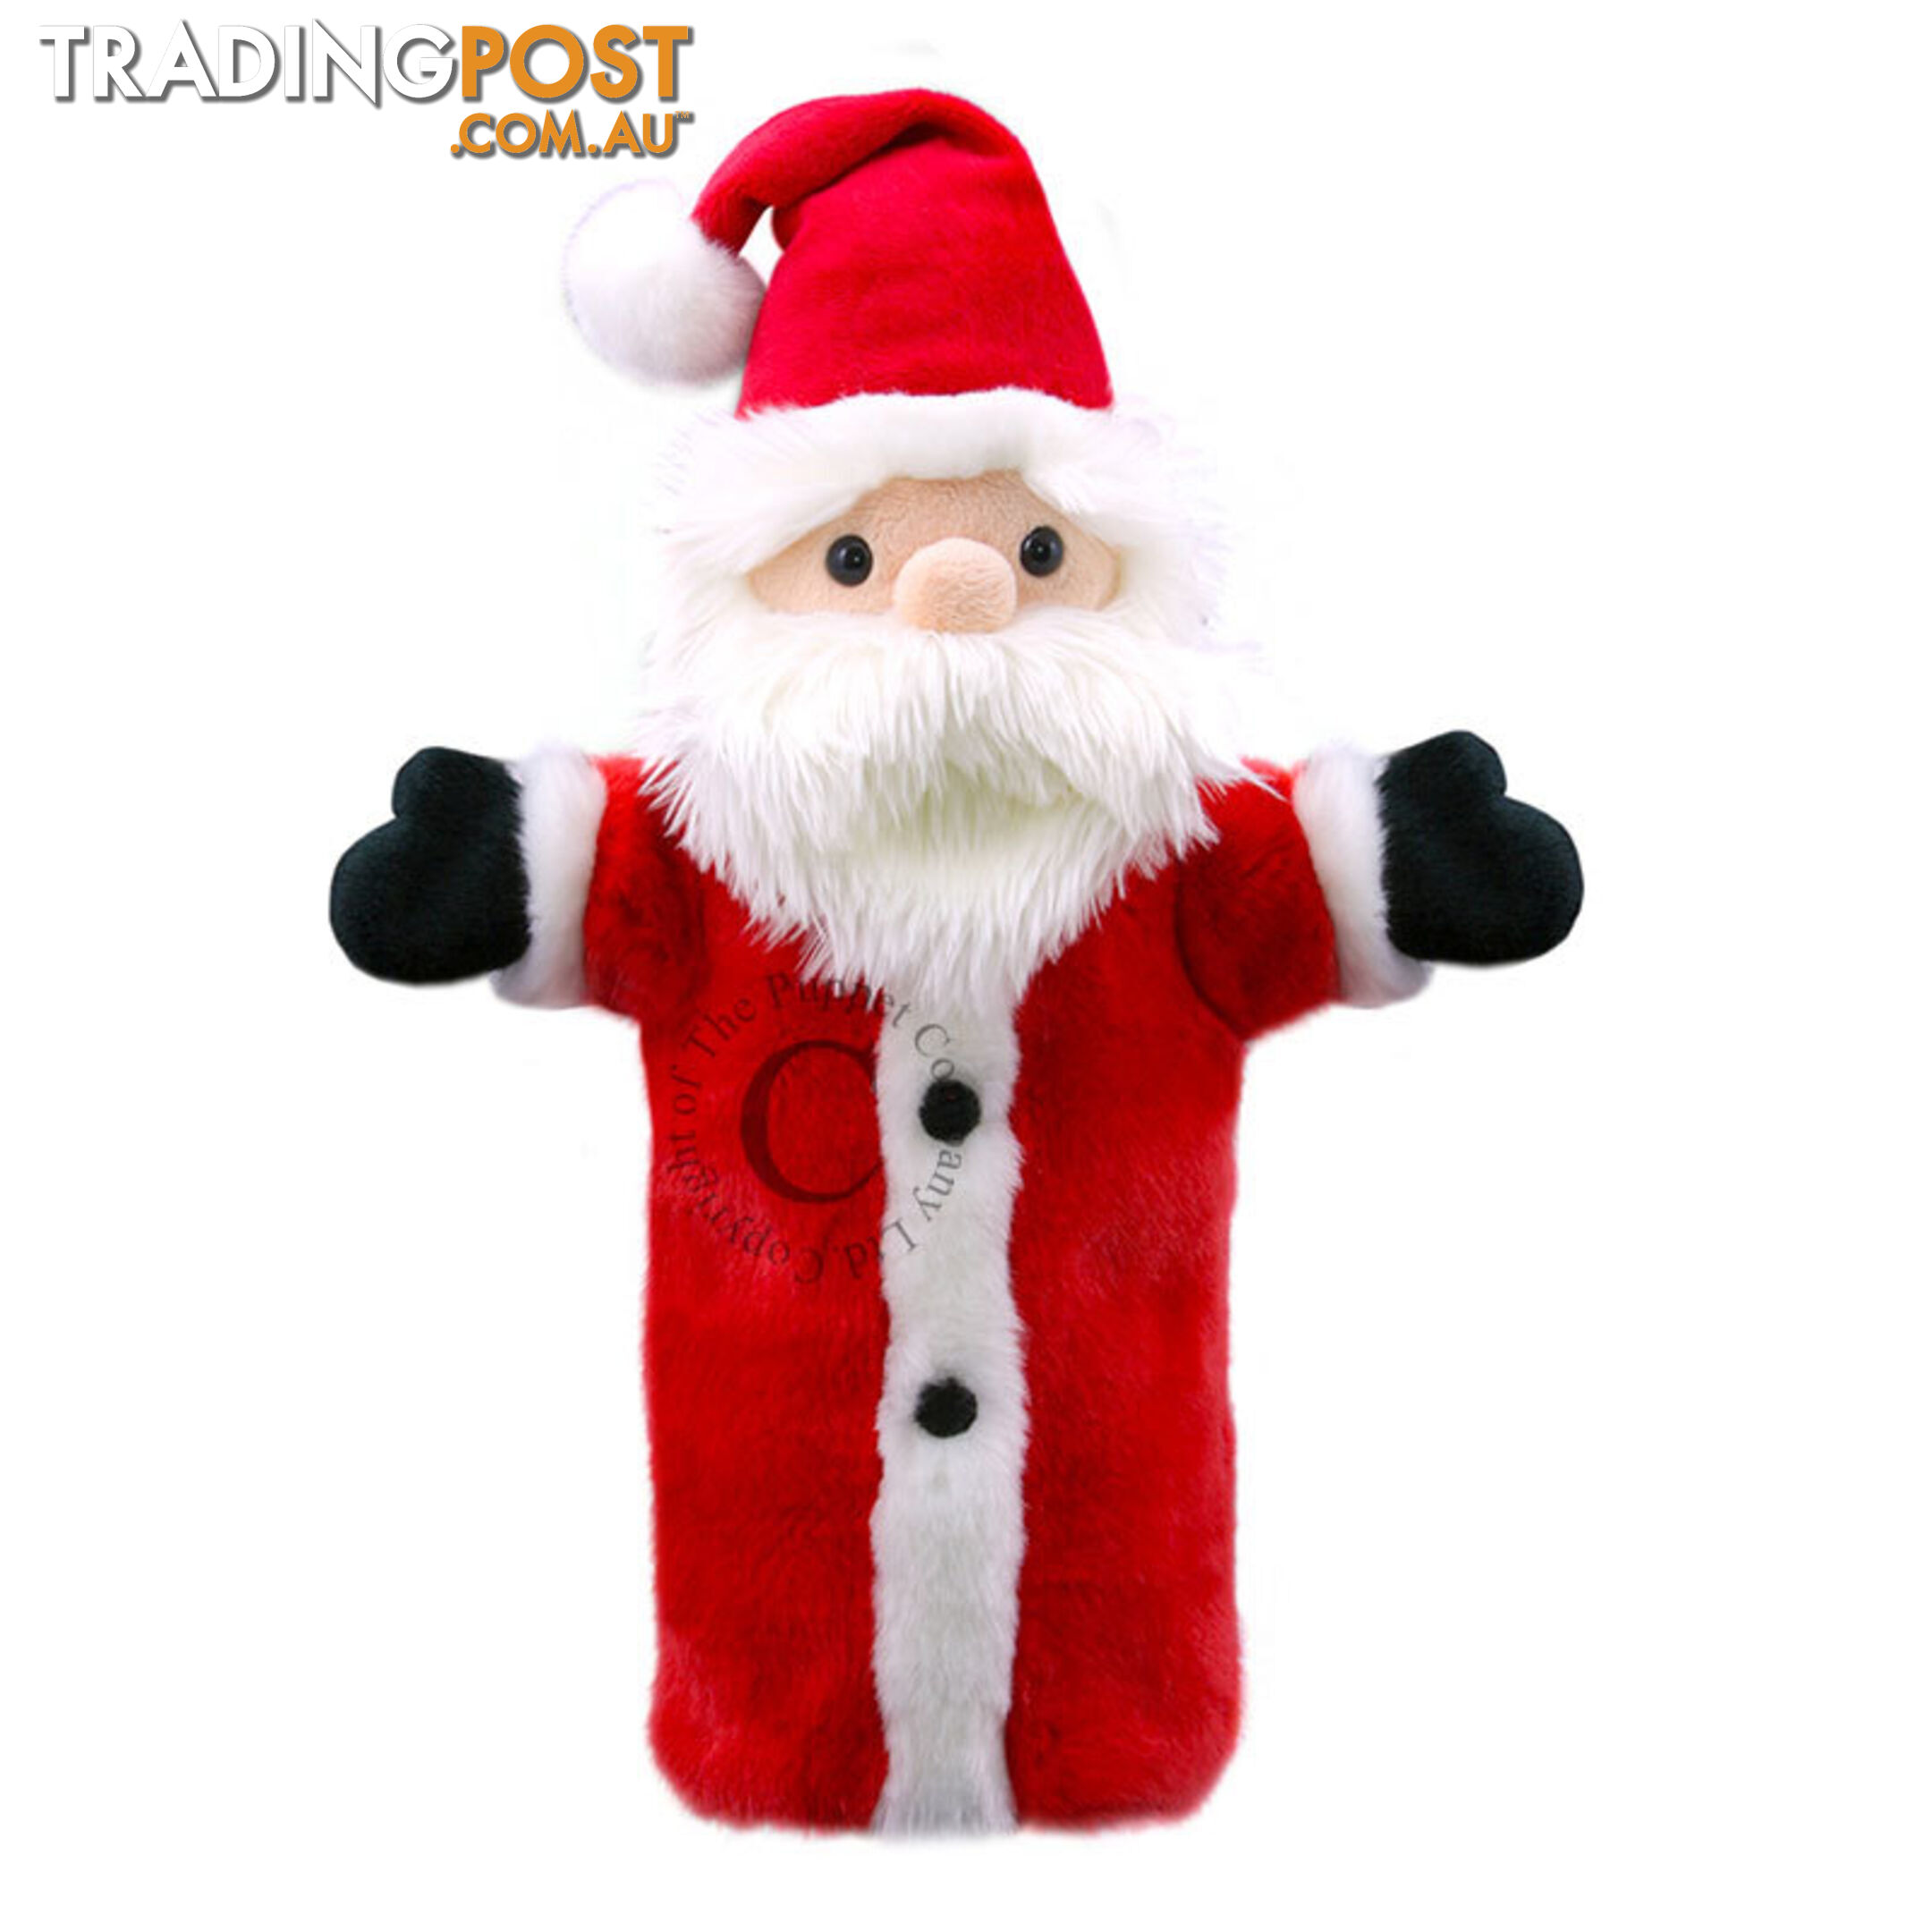 Santa - Long Sleeve Puppet - The Puppet Company